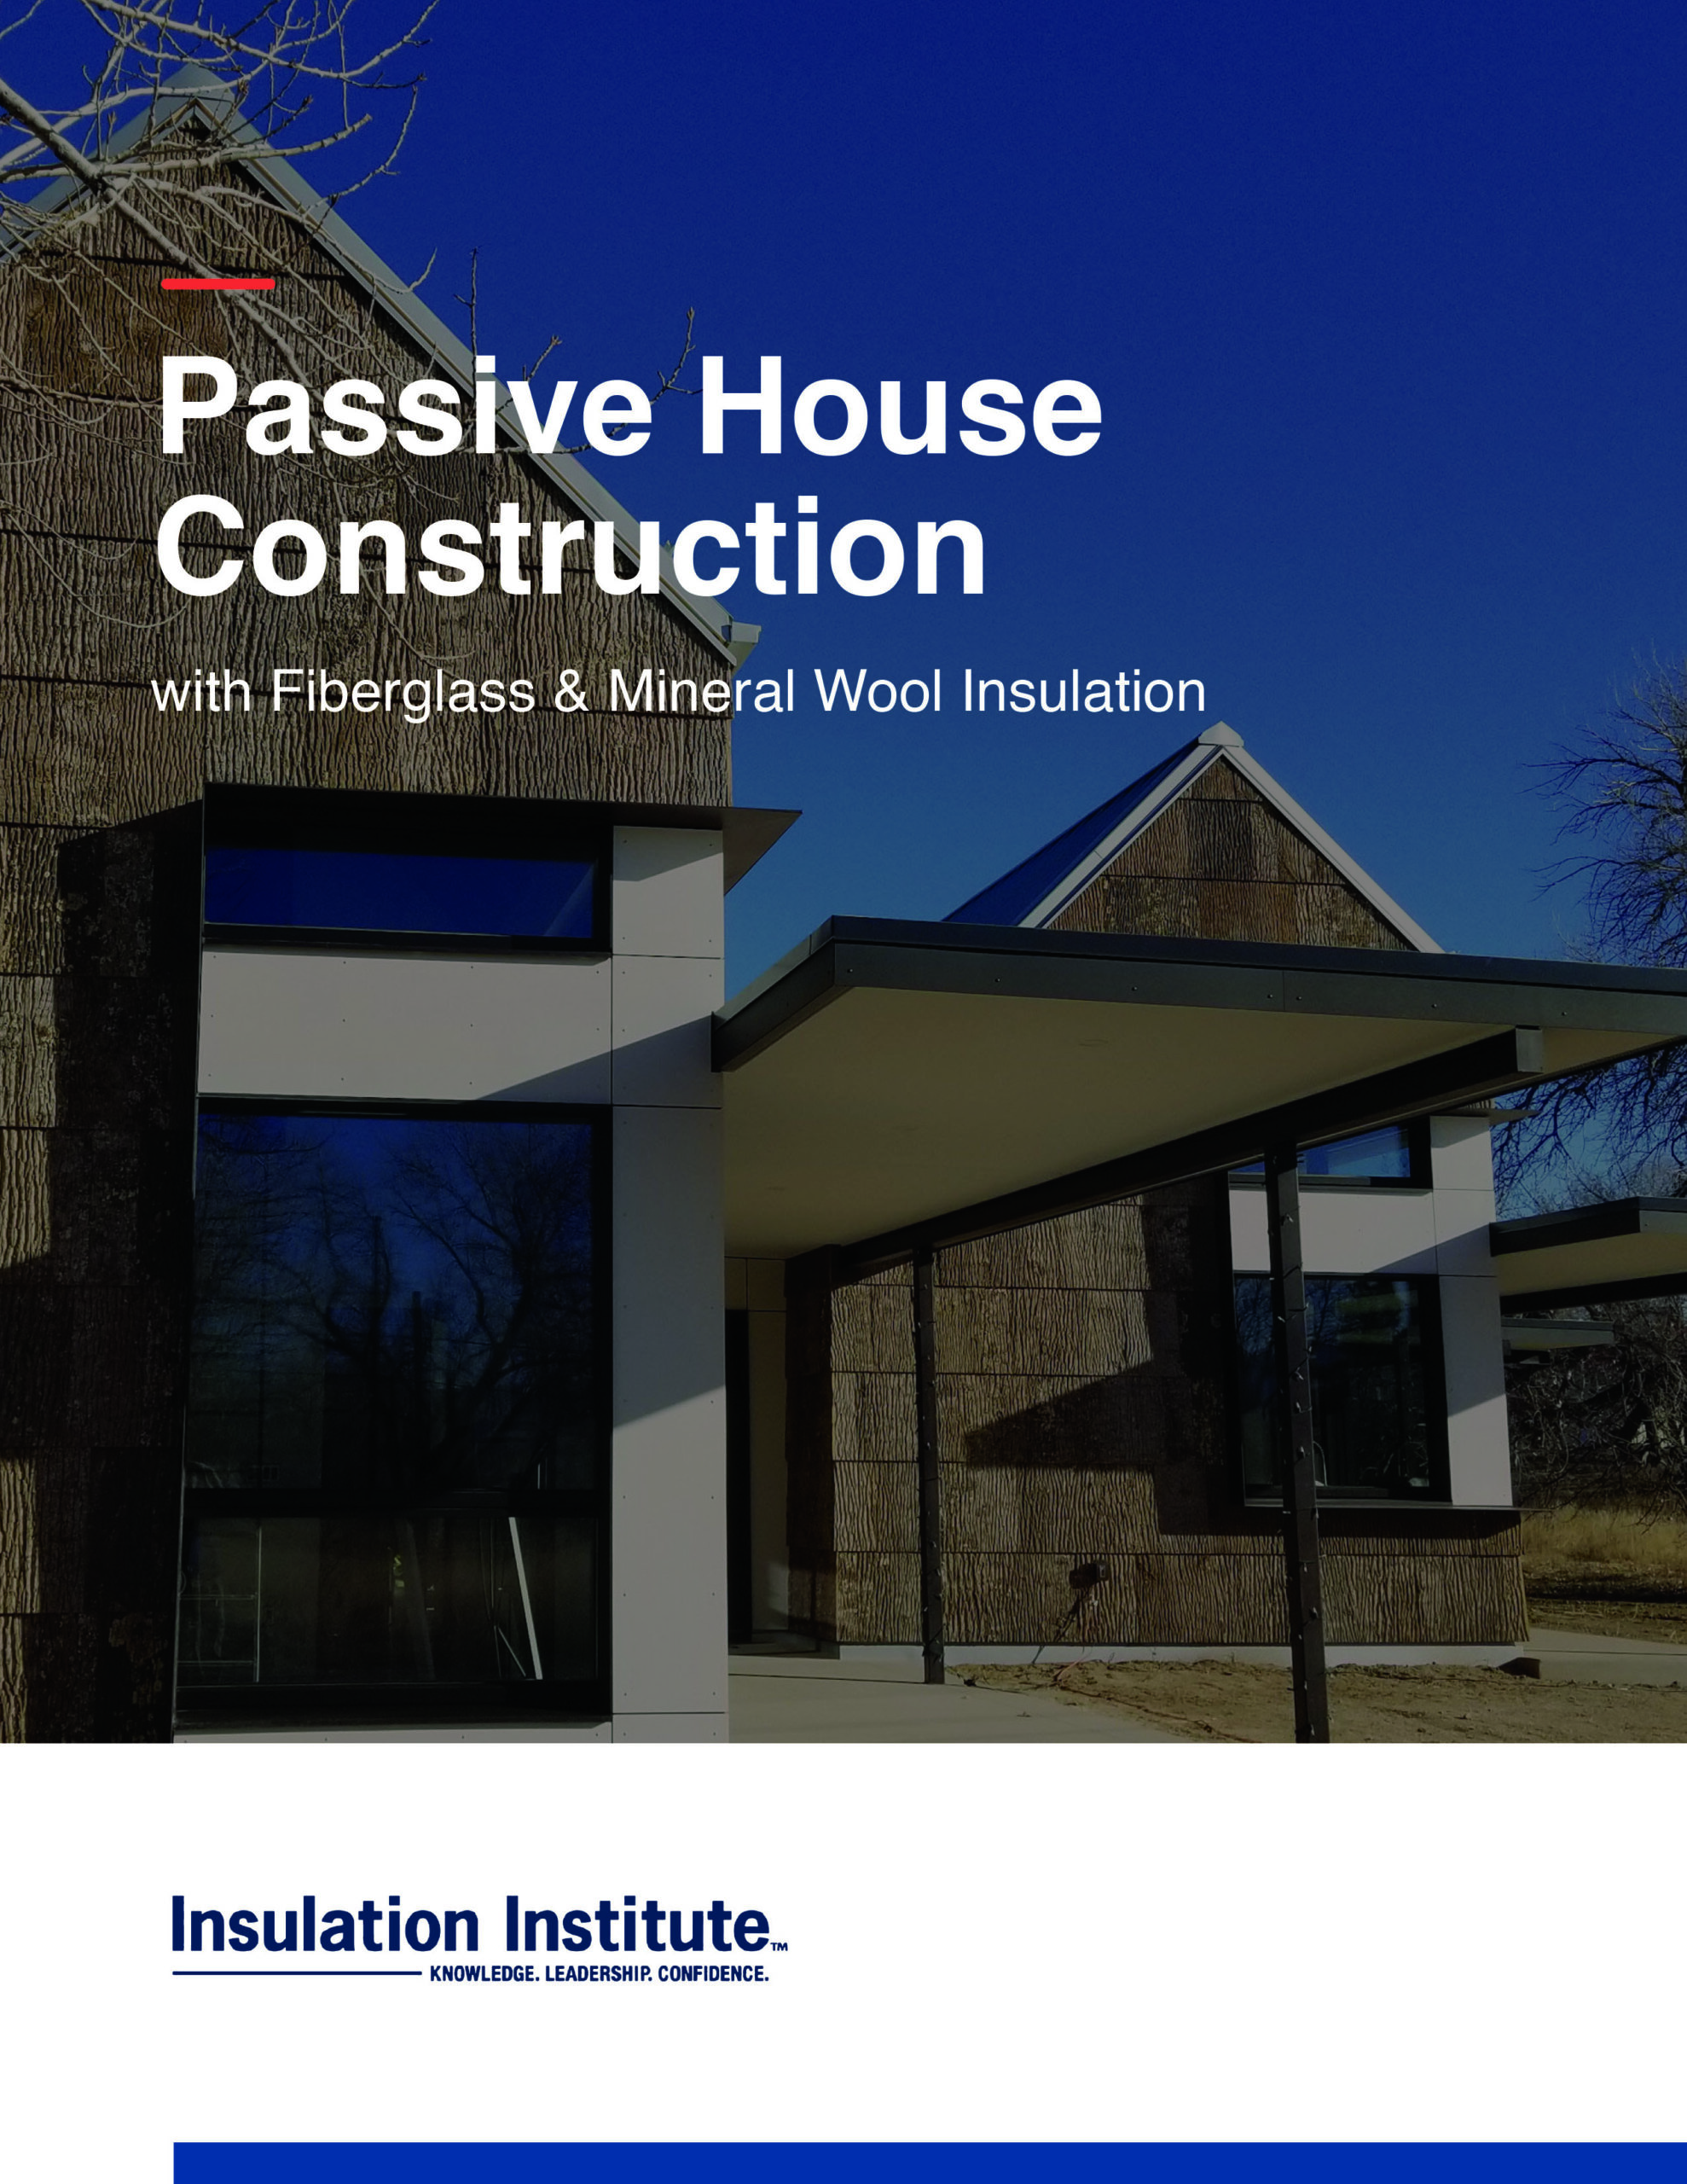 New: Passive House Case Study